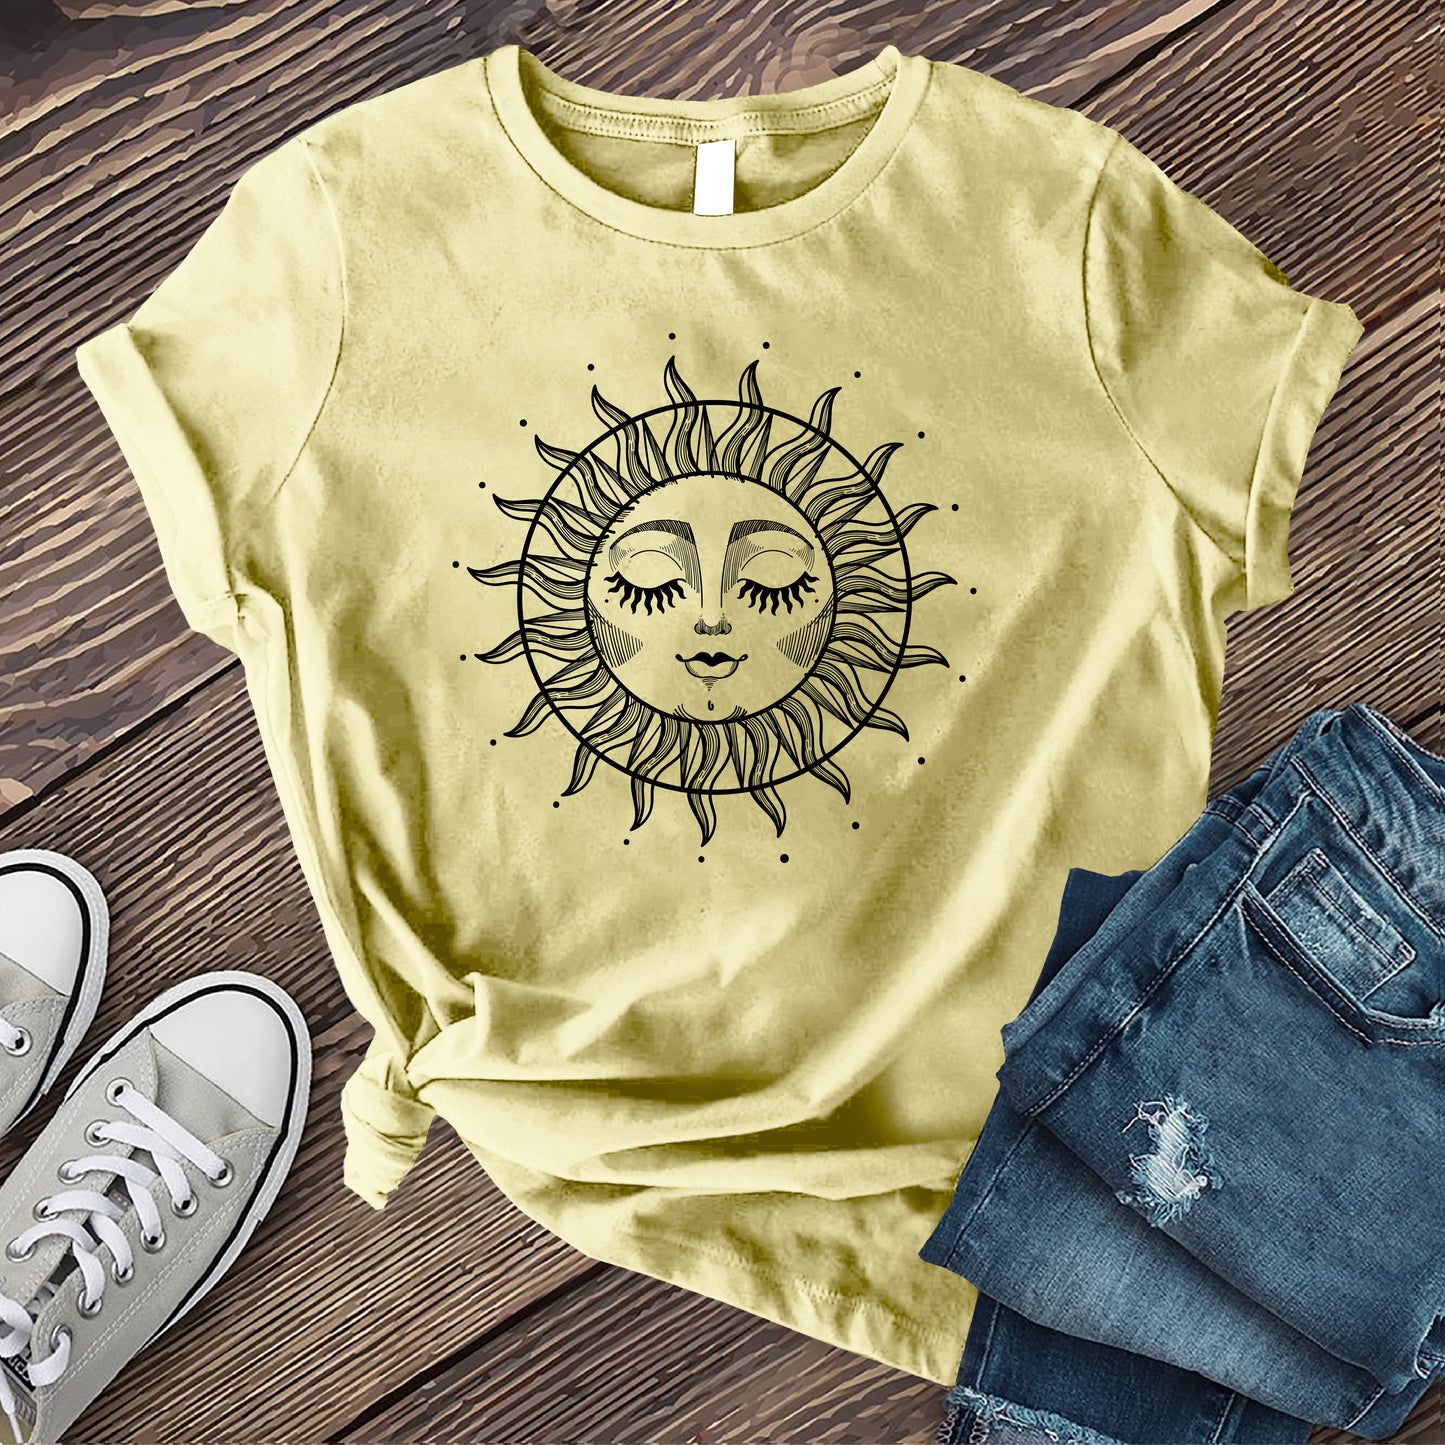 Smiling Sun T-shirt